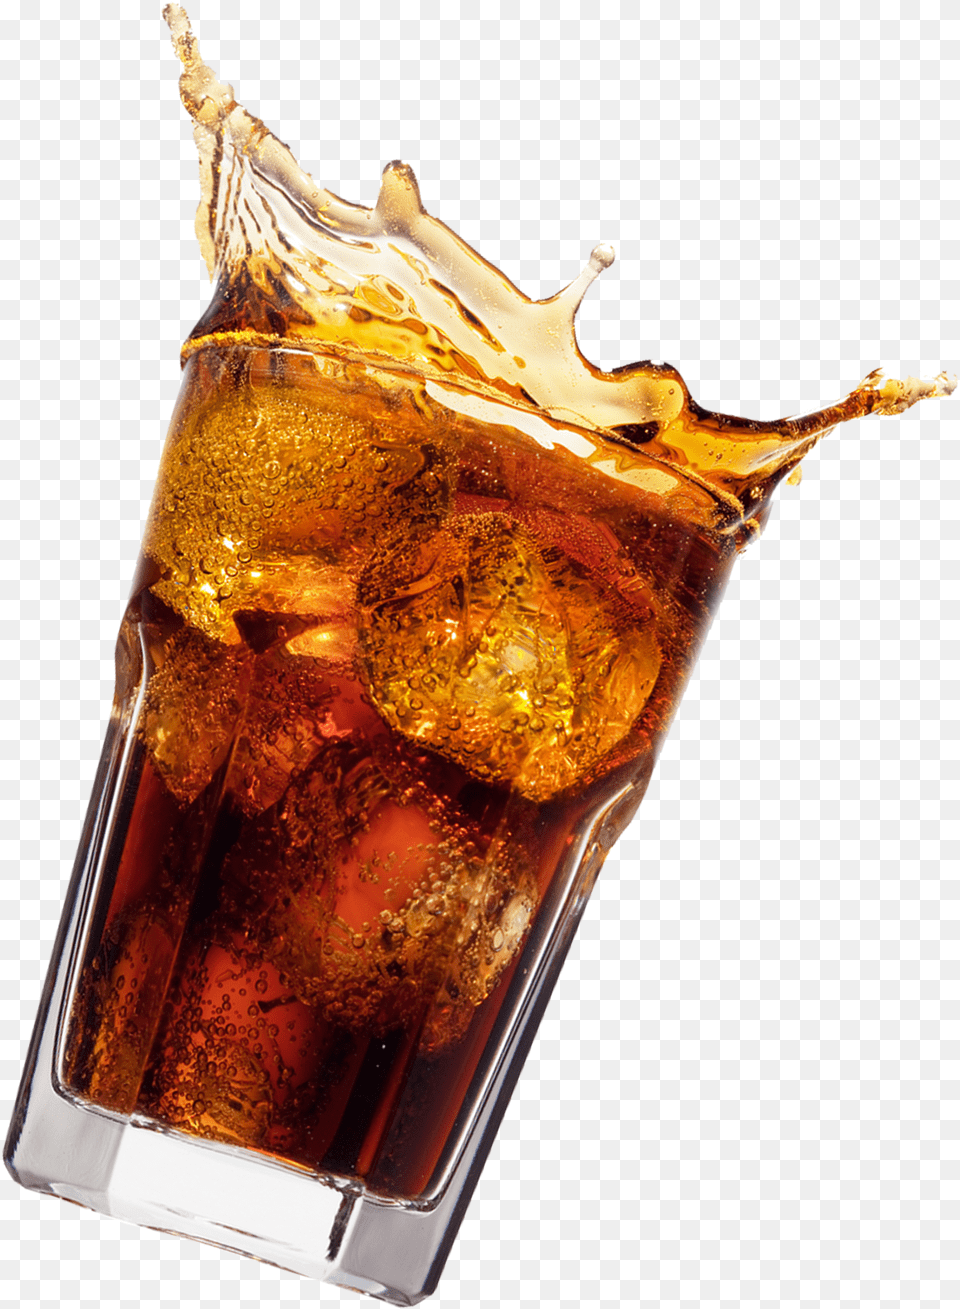 Hd Coca Cola Glass Image Coca Cola Glass, Alcohol, Beverage, Cocktail, Coke Free Png Download